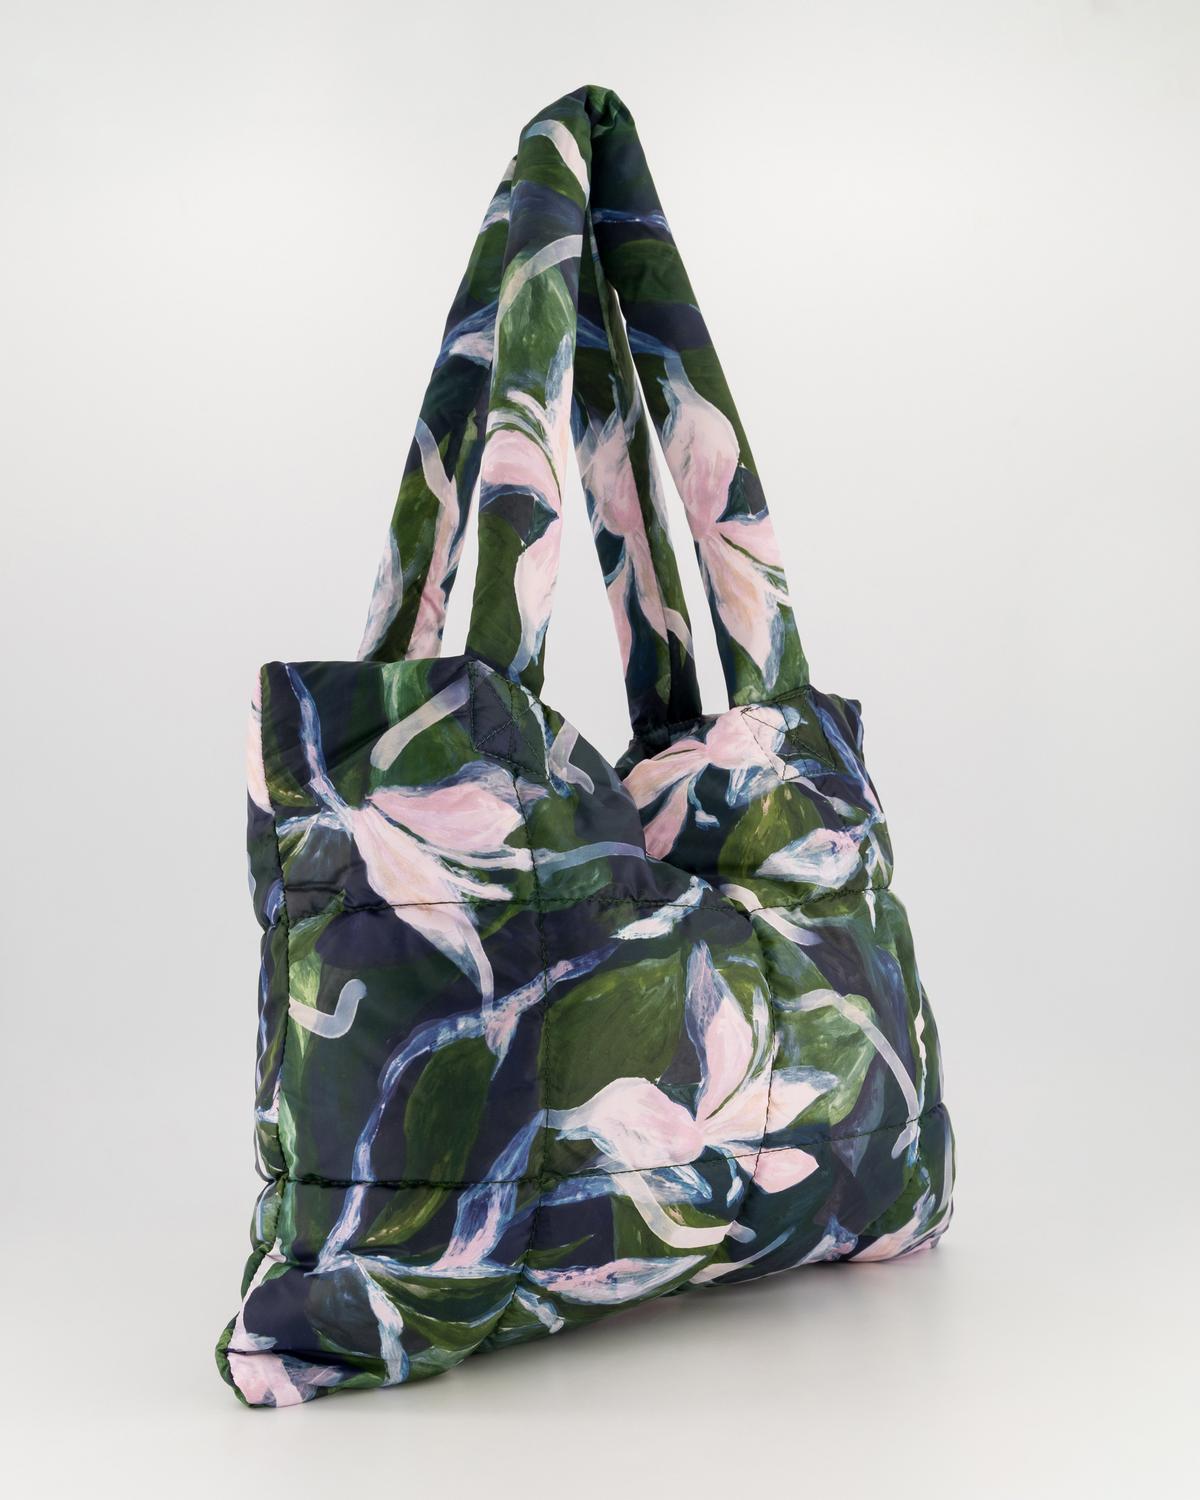 Poppy Printed Shopping Bag -  Green